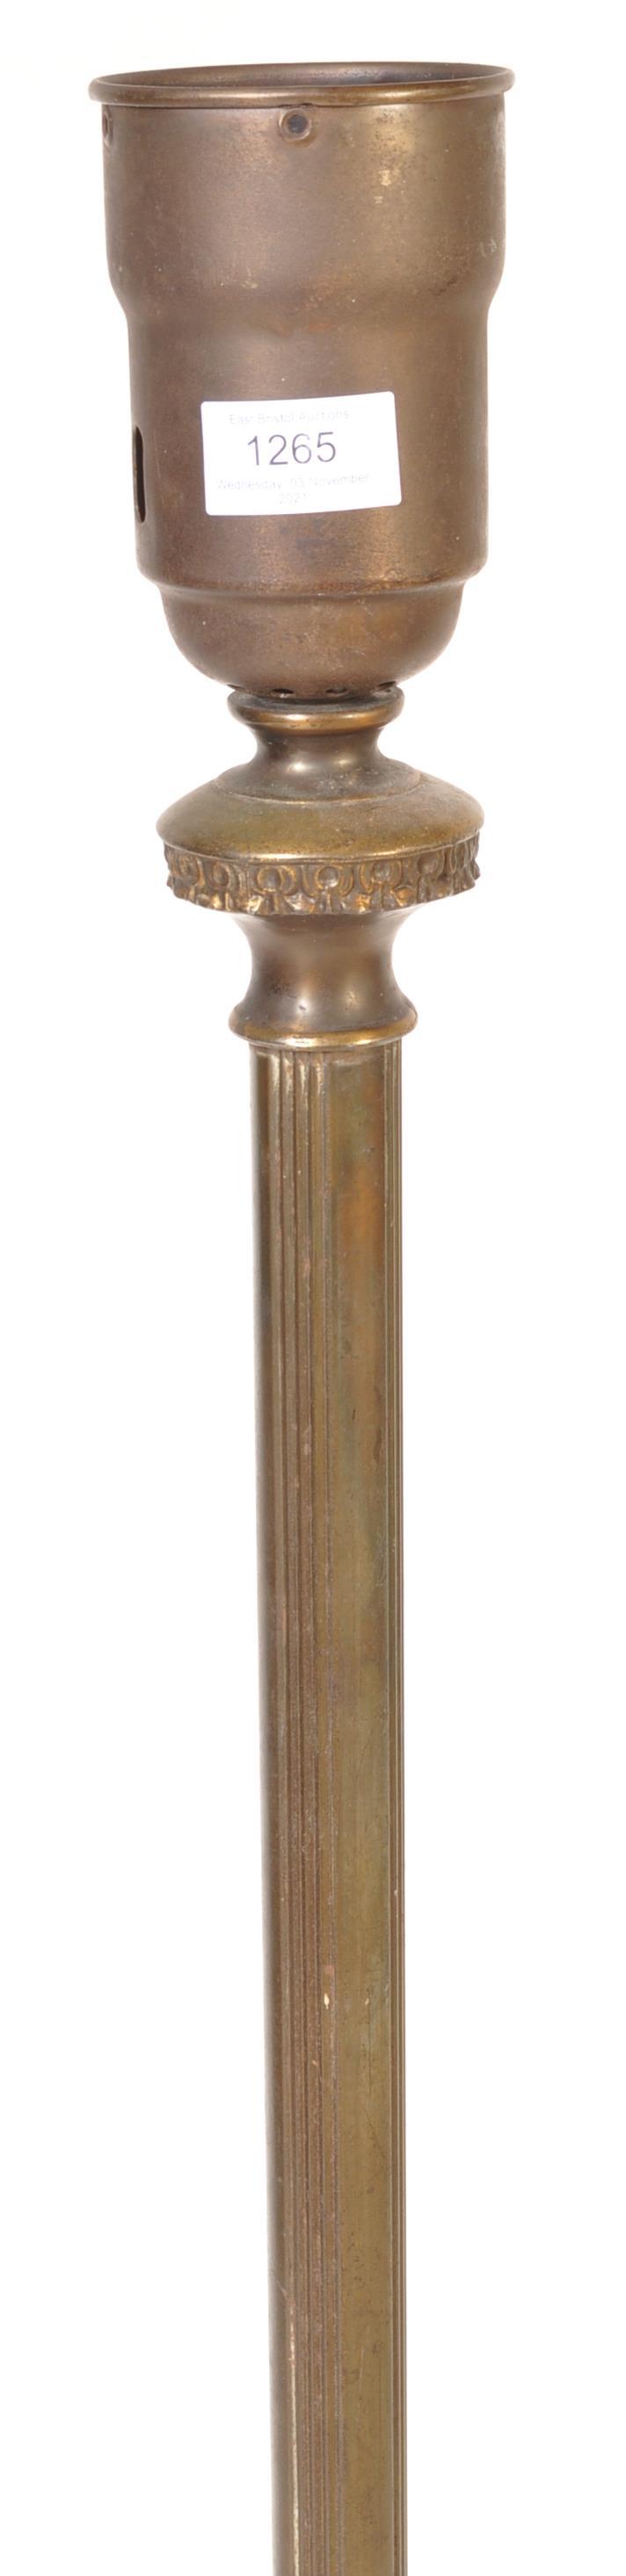 VINTAGE 20TH CENTURY CIRCA 1950S BRASS STANDARD LAMP - Image 3 of 4